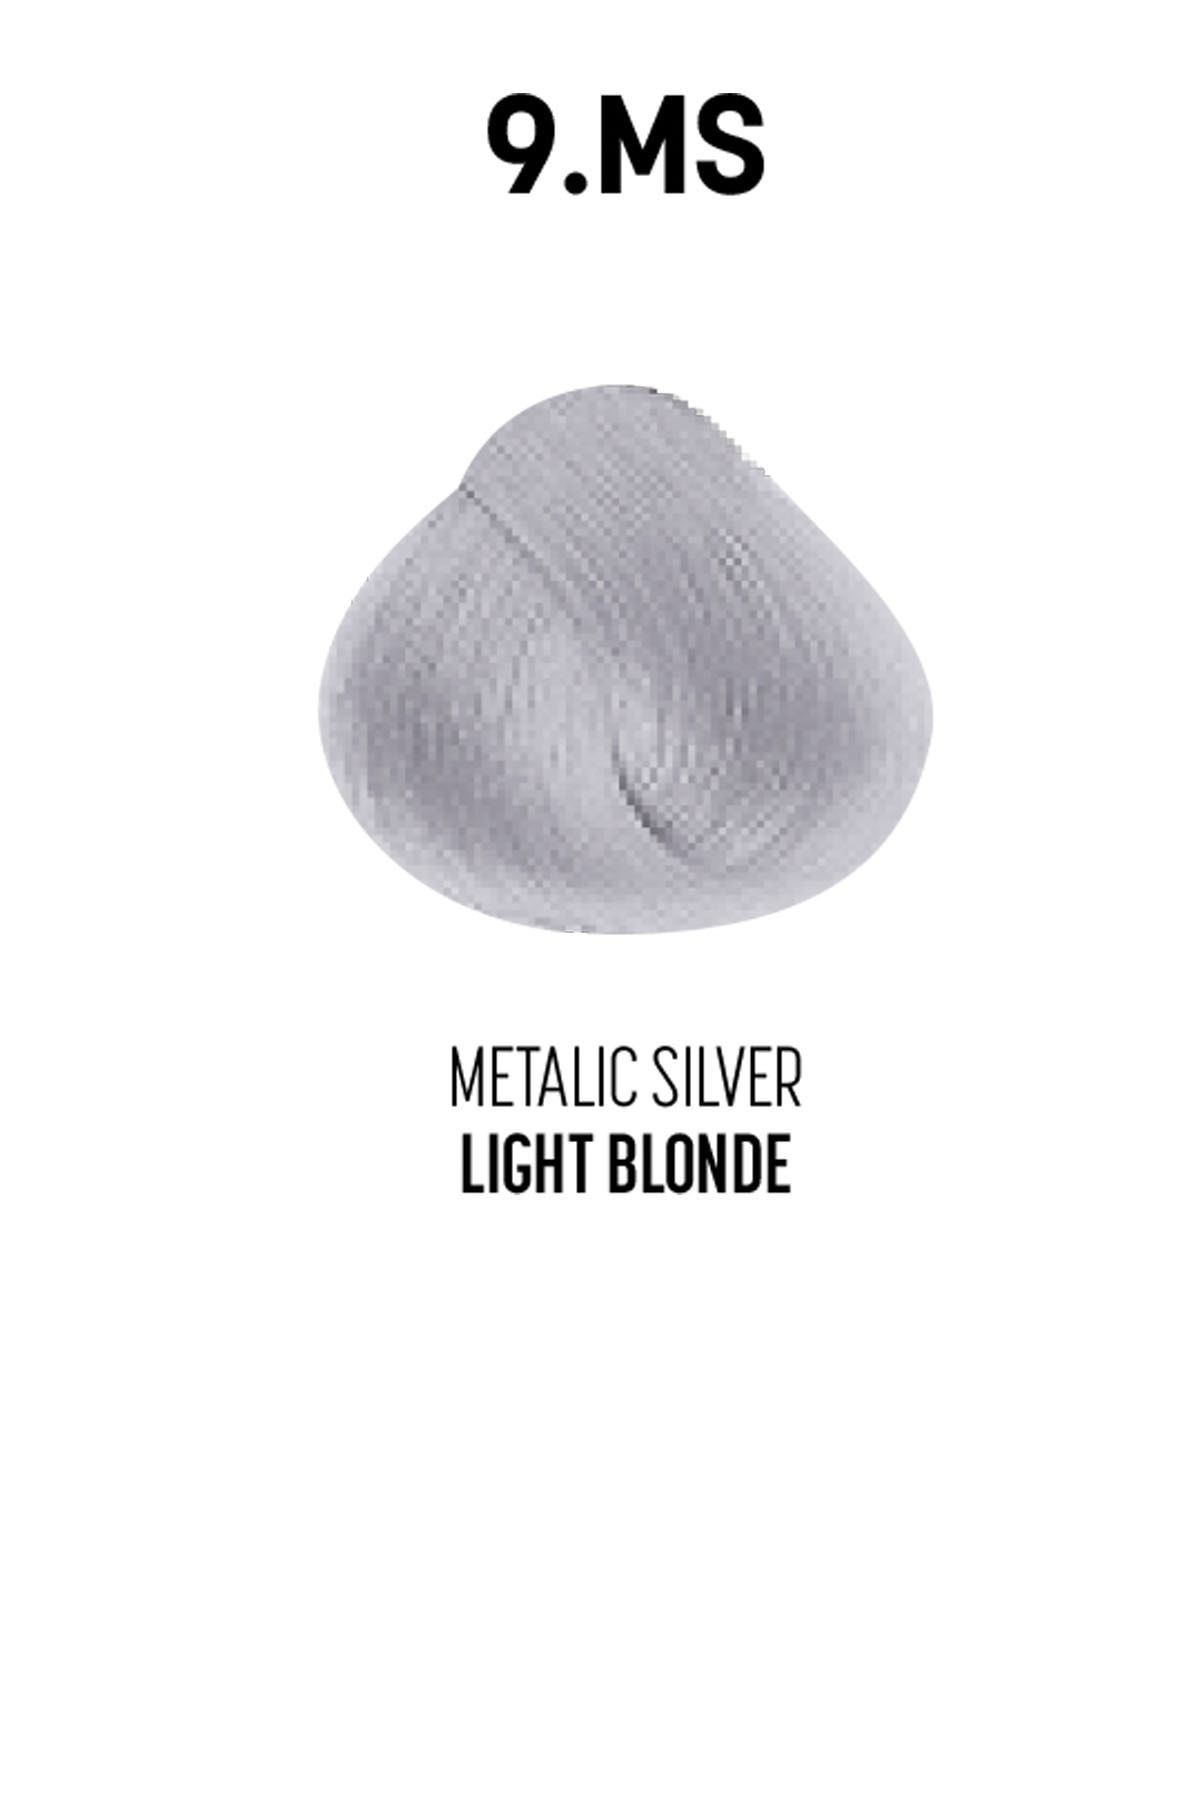 bioplex professional istanbul 9.ms / Metalic Silver Light Blonde Glamlook Saç Boyası